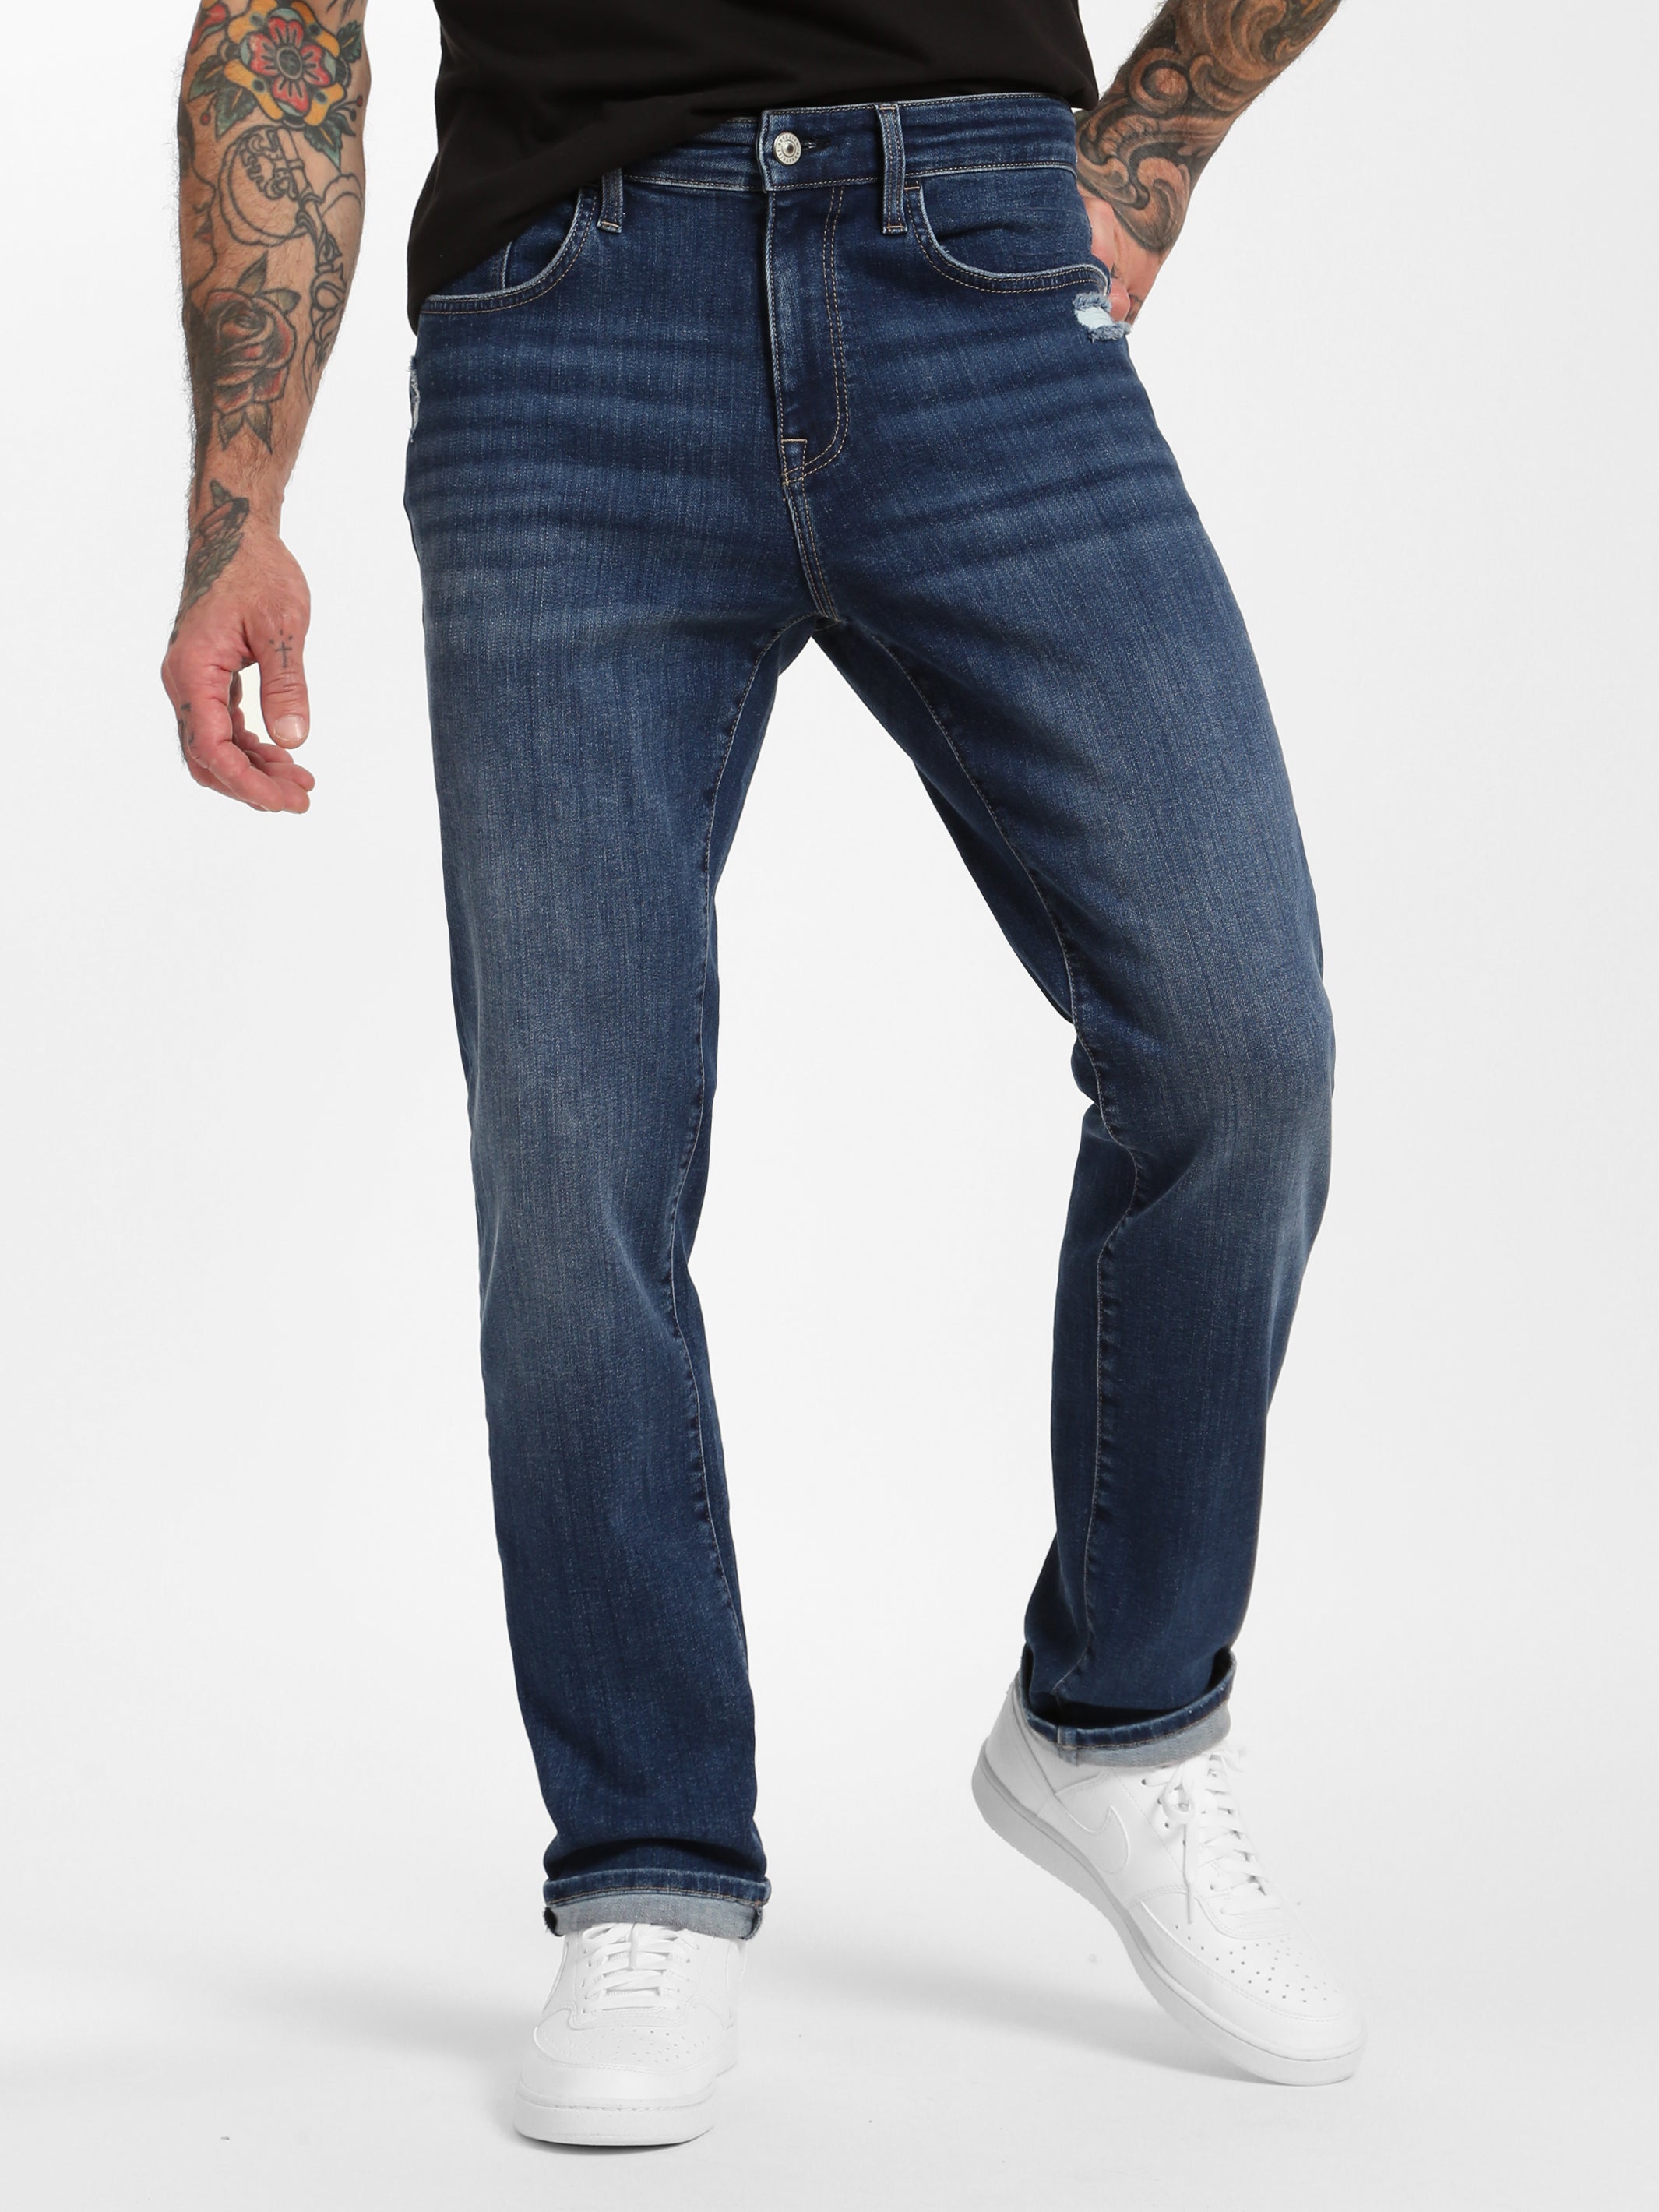 Franklin Athletic Fit Jeans in Dark Distressed Denim